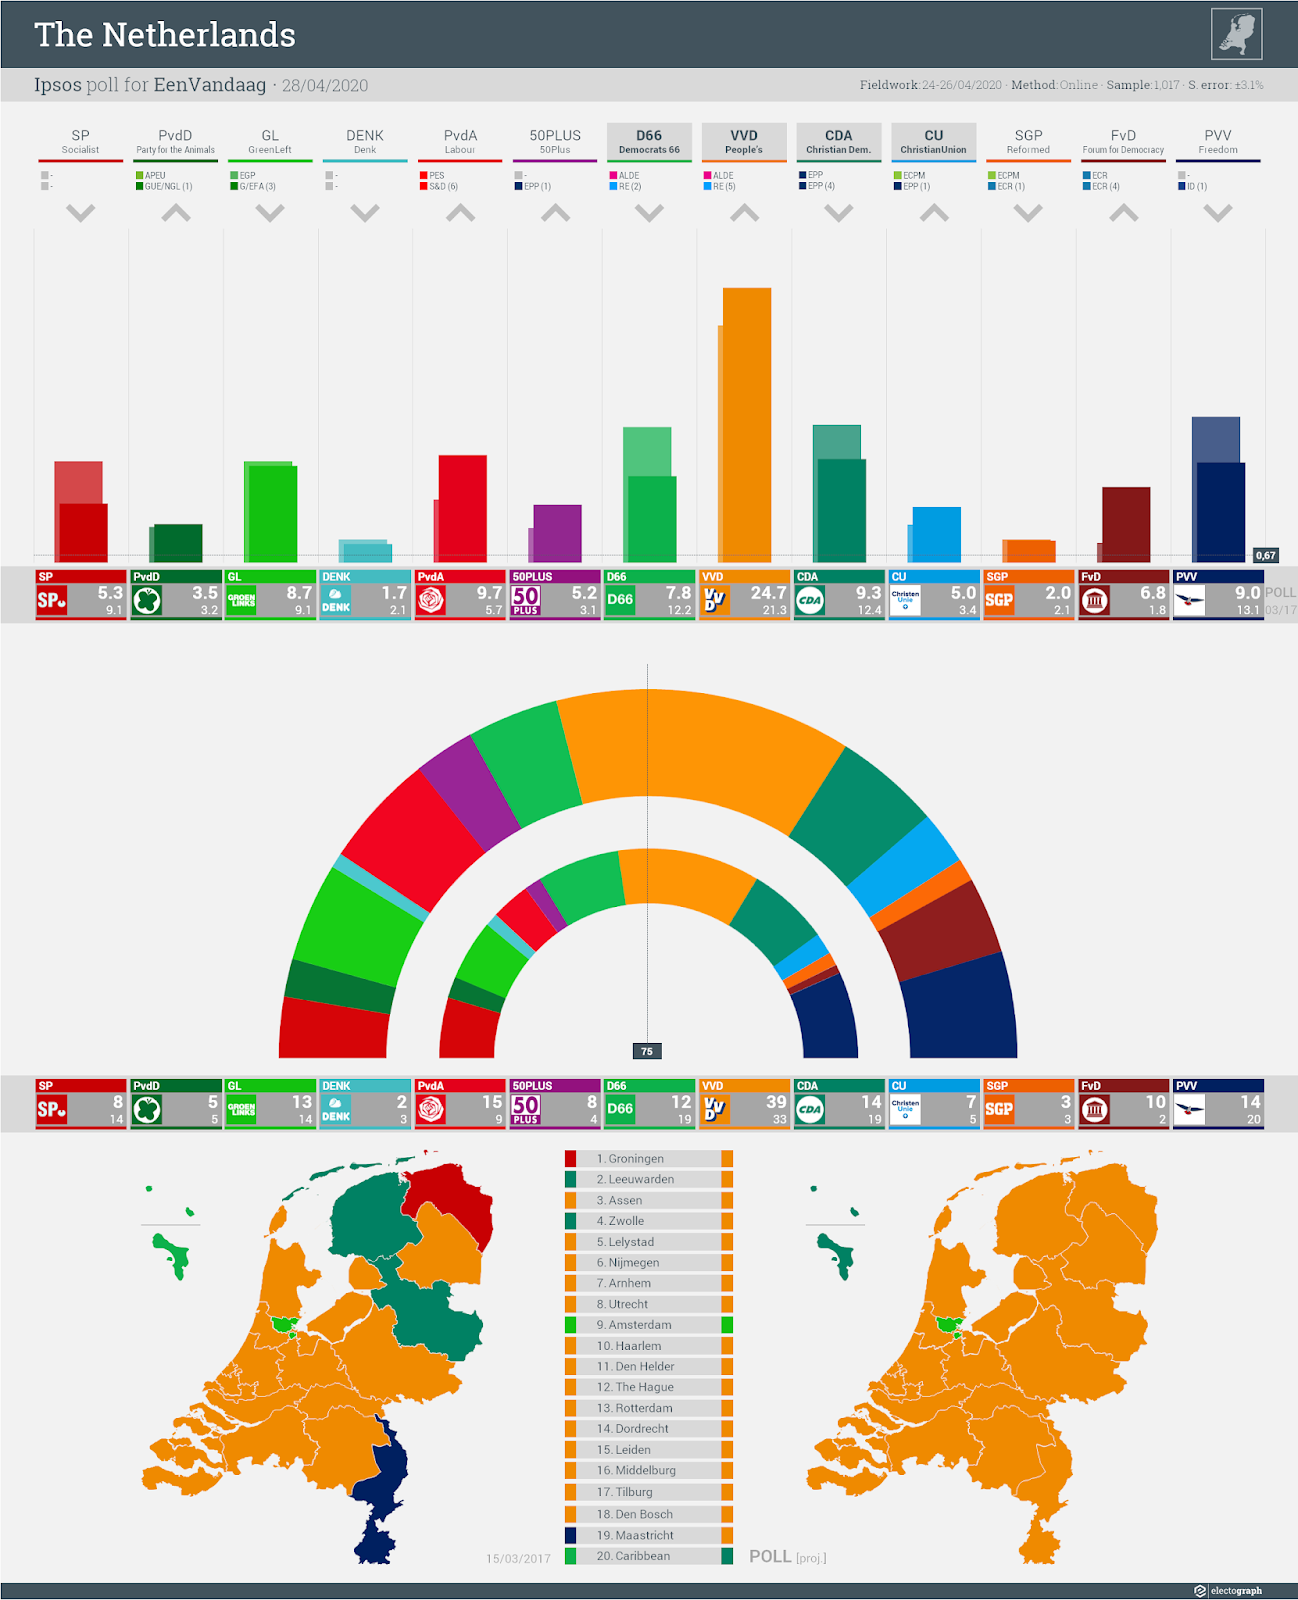 THE NETHERLANDS: Ipsos poll chart for EenVandaag, 28 April 2020